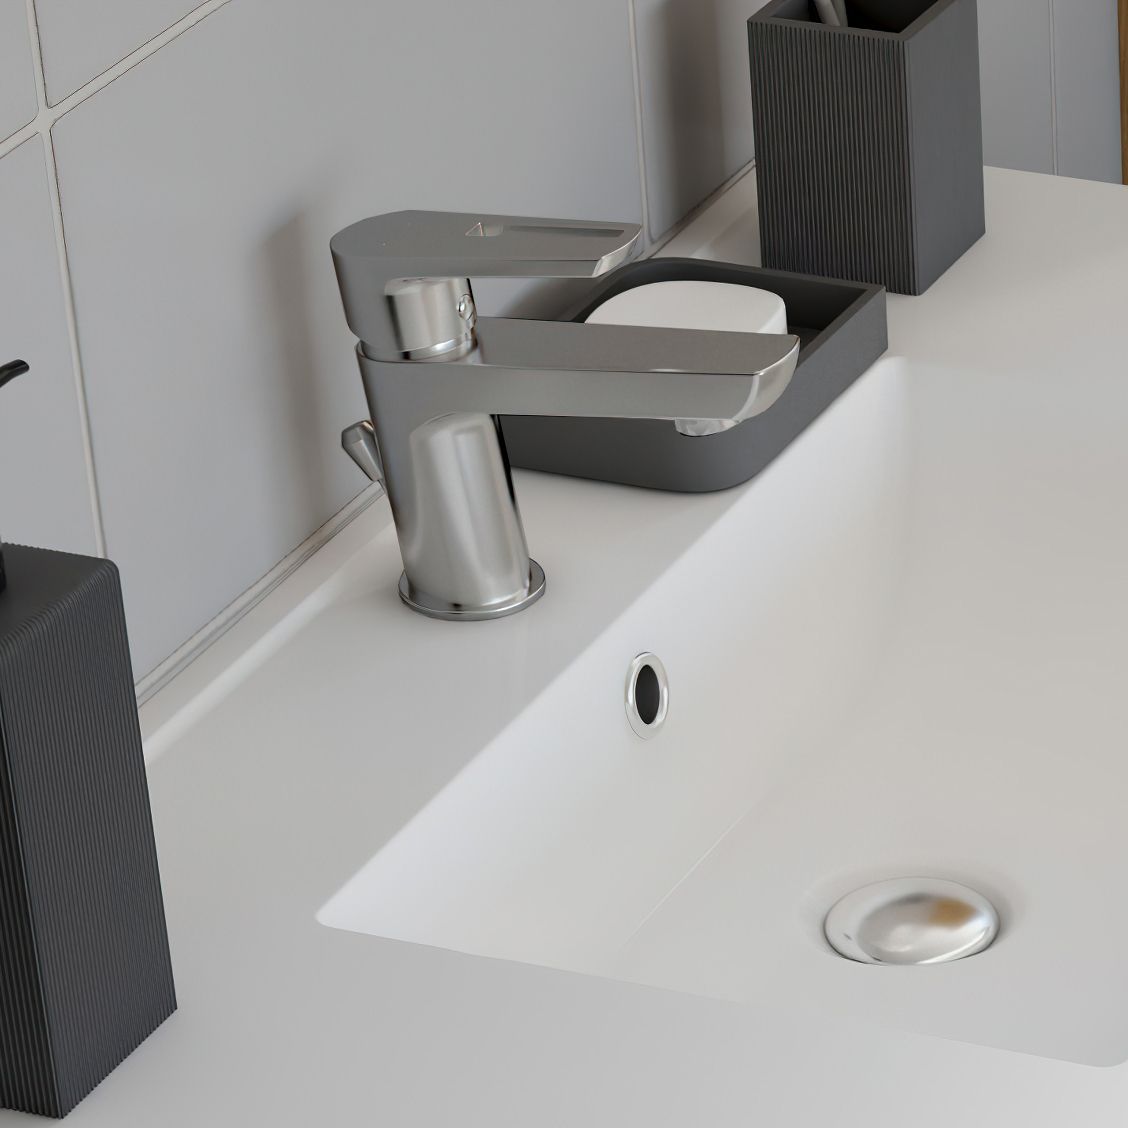  Mixer tap for bathroom sink